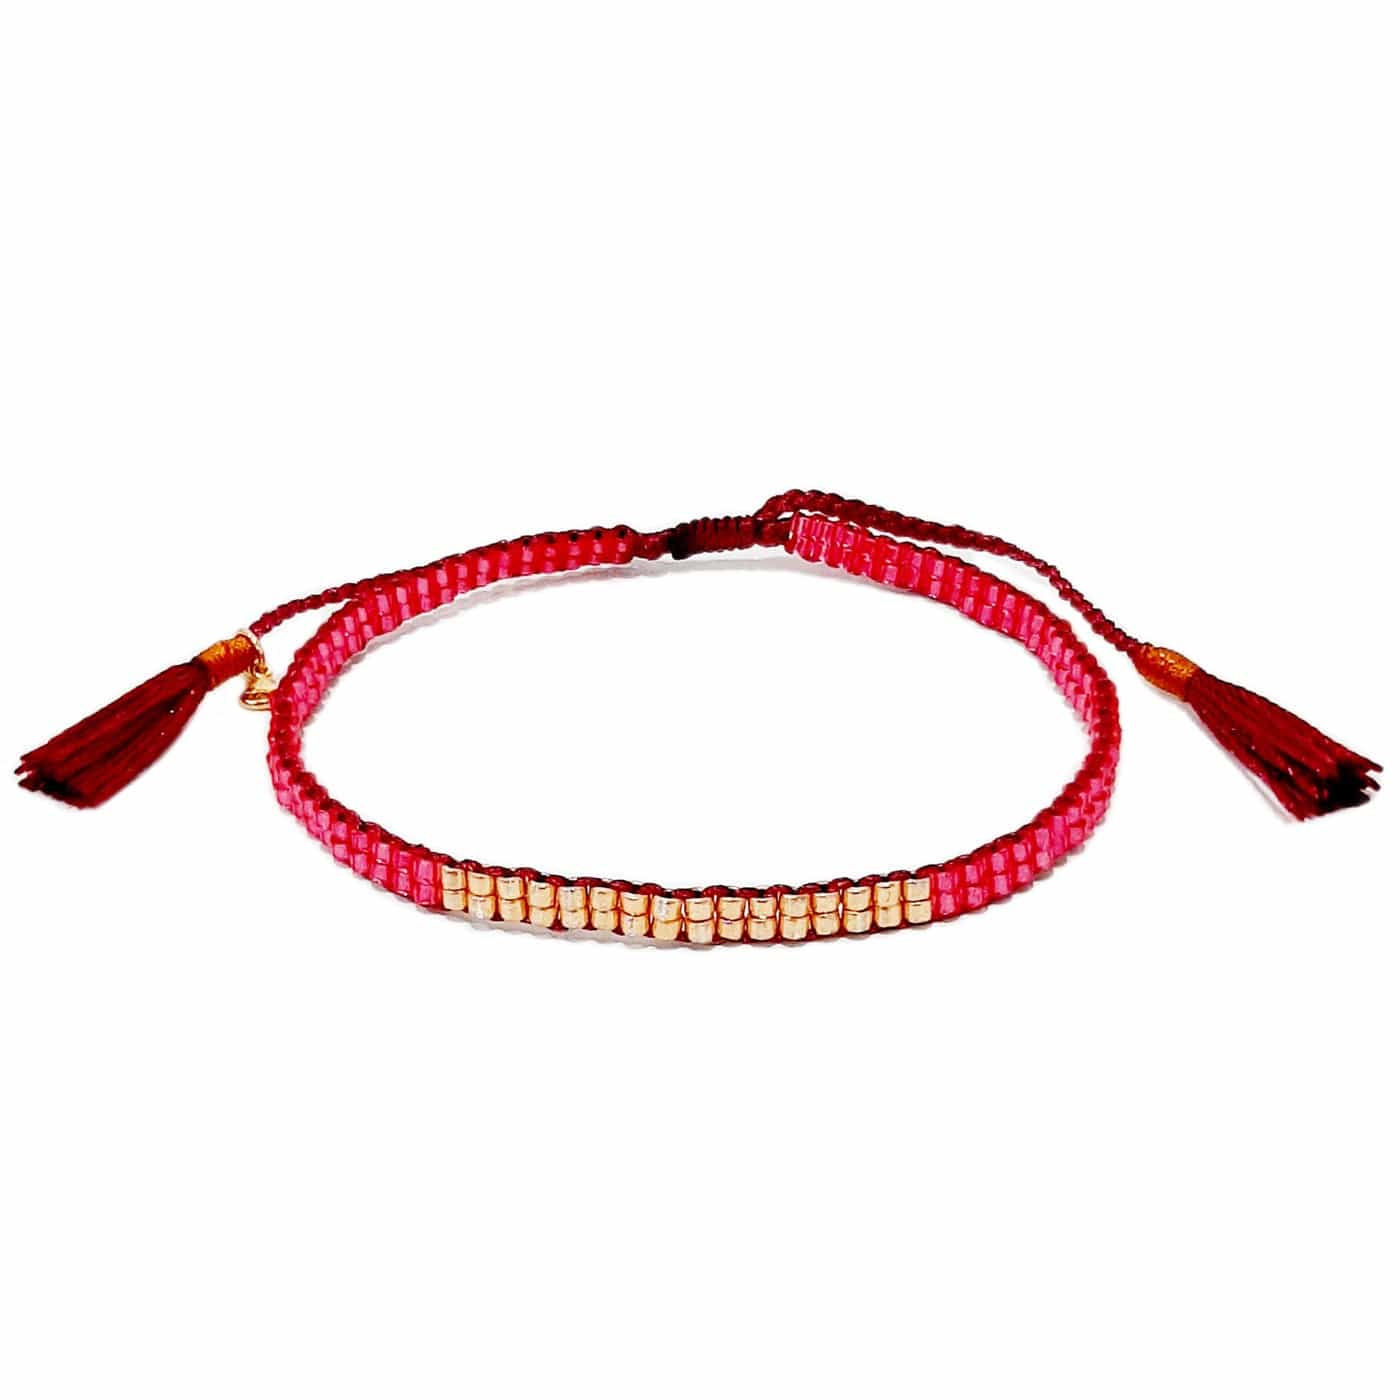 TAI JEWELRY Bracelet Red Japanese Double Row Beaded W/ Gold Accent Bracelet | Handmade